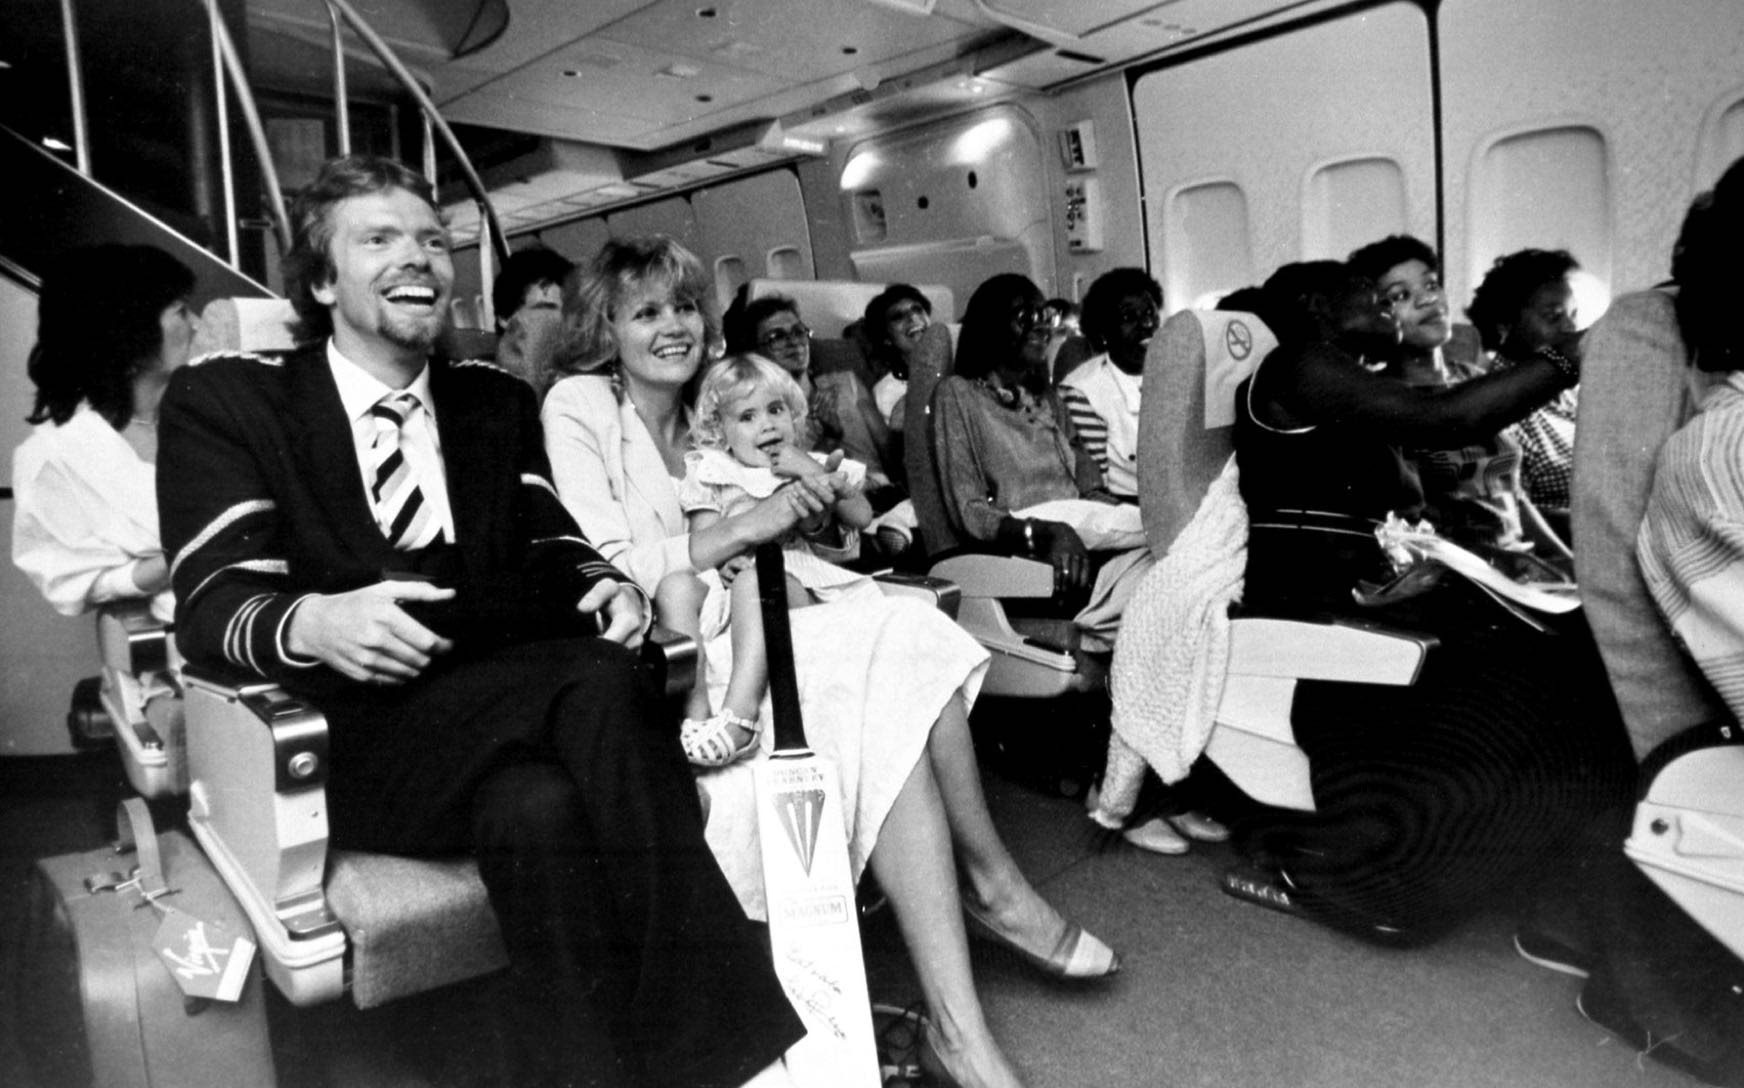 Richard and family sitting on their seats on Virgin Atlantic's inaugural flight 